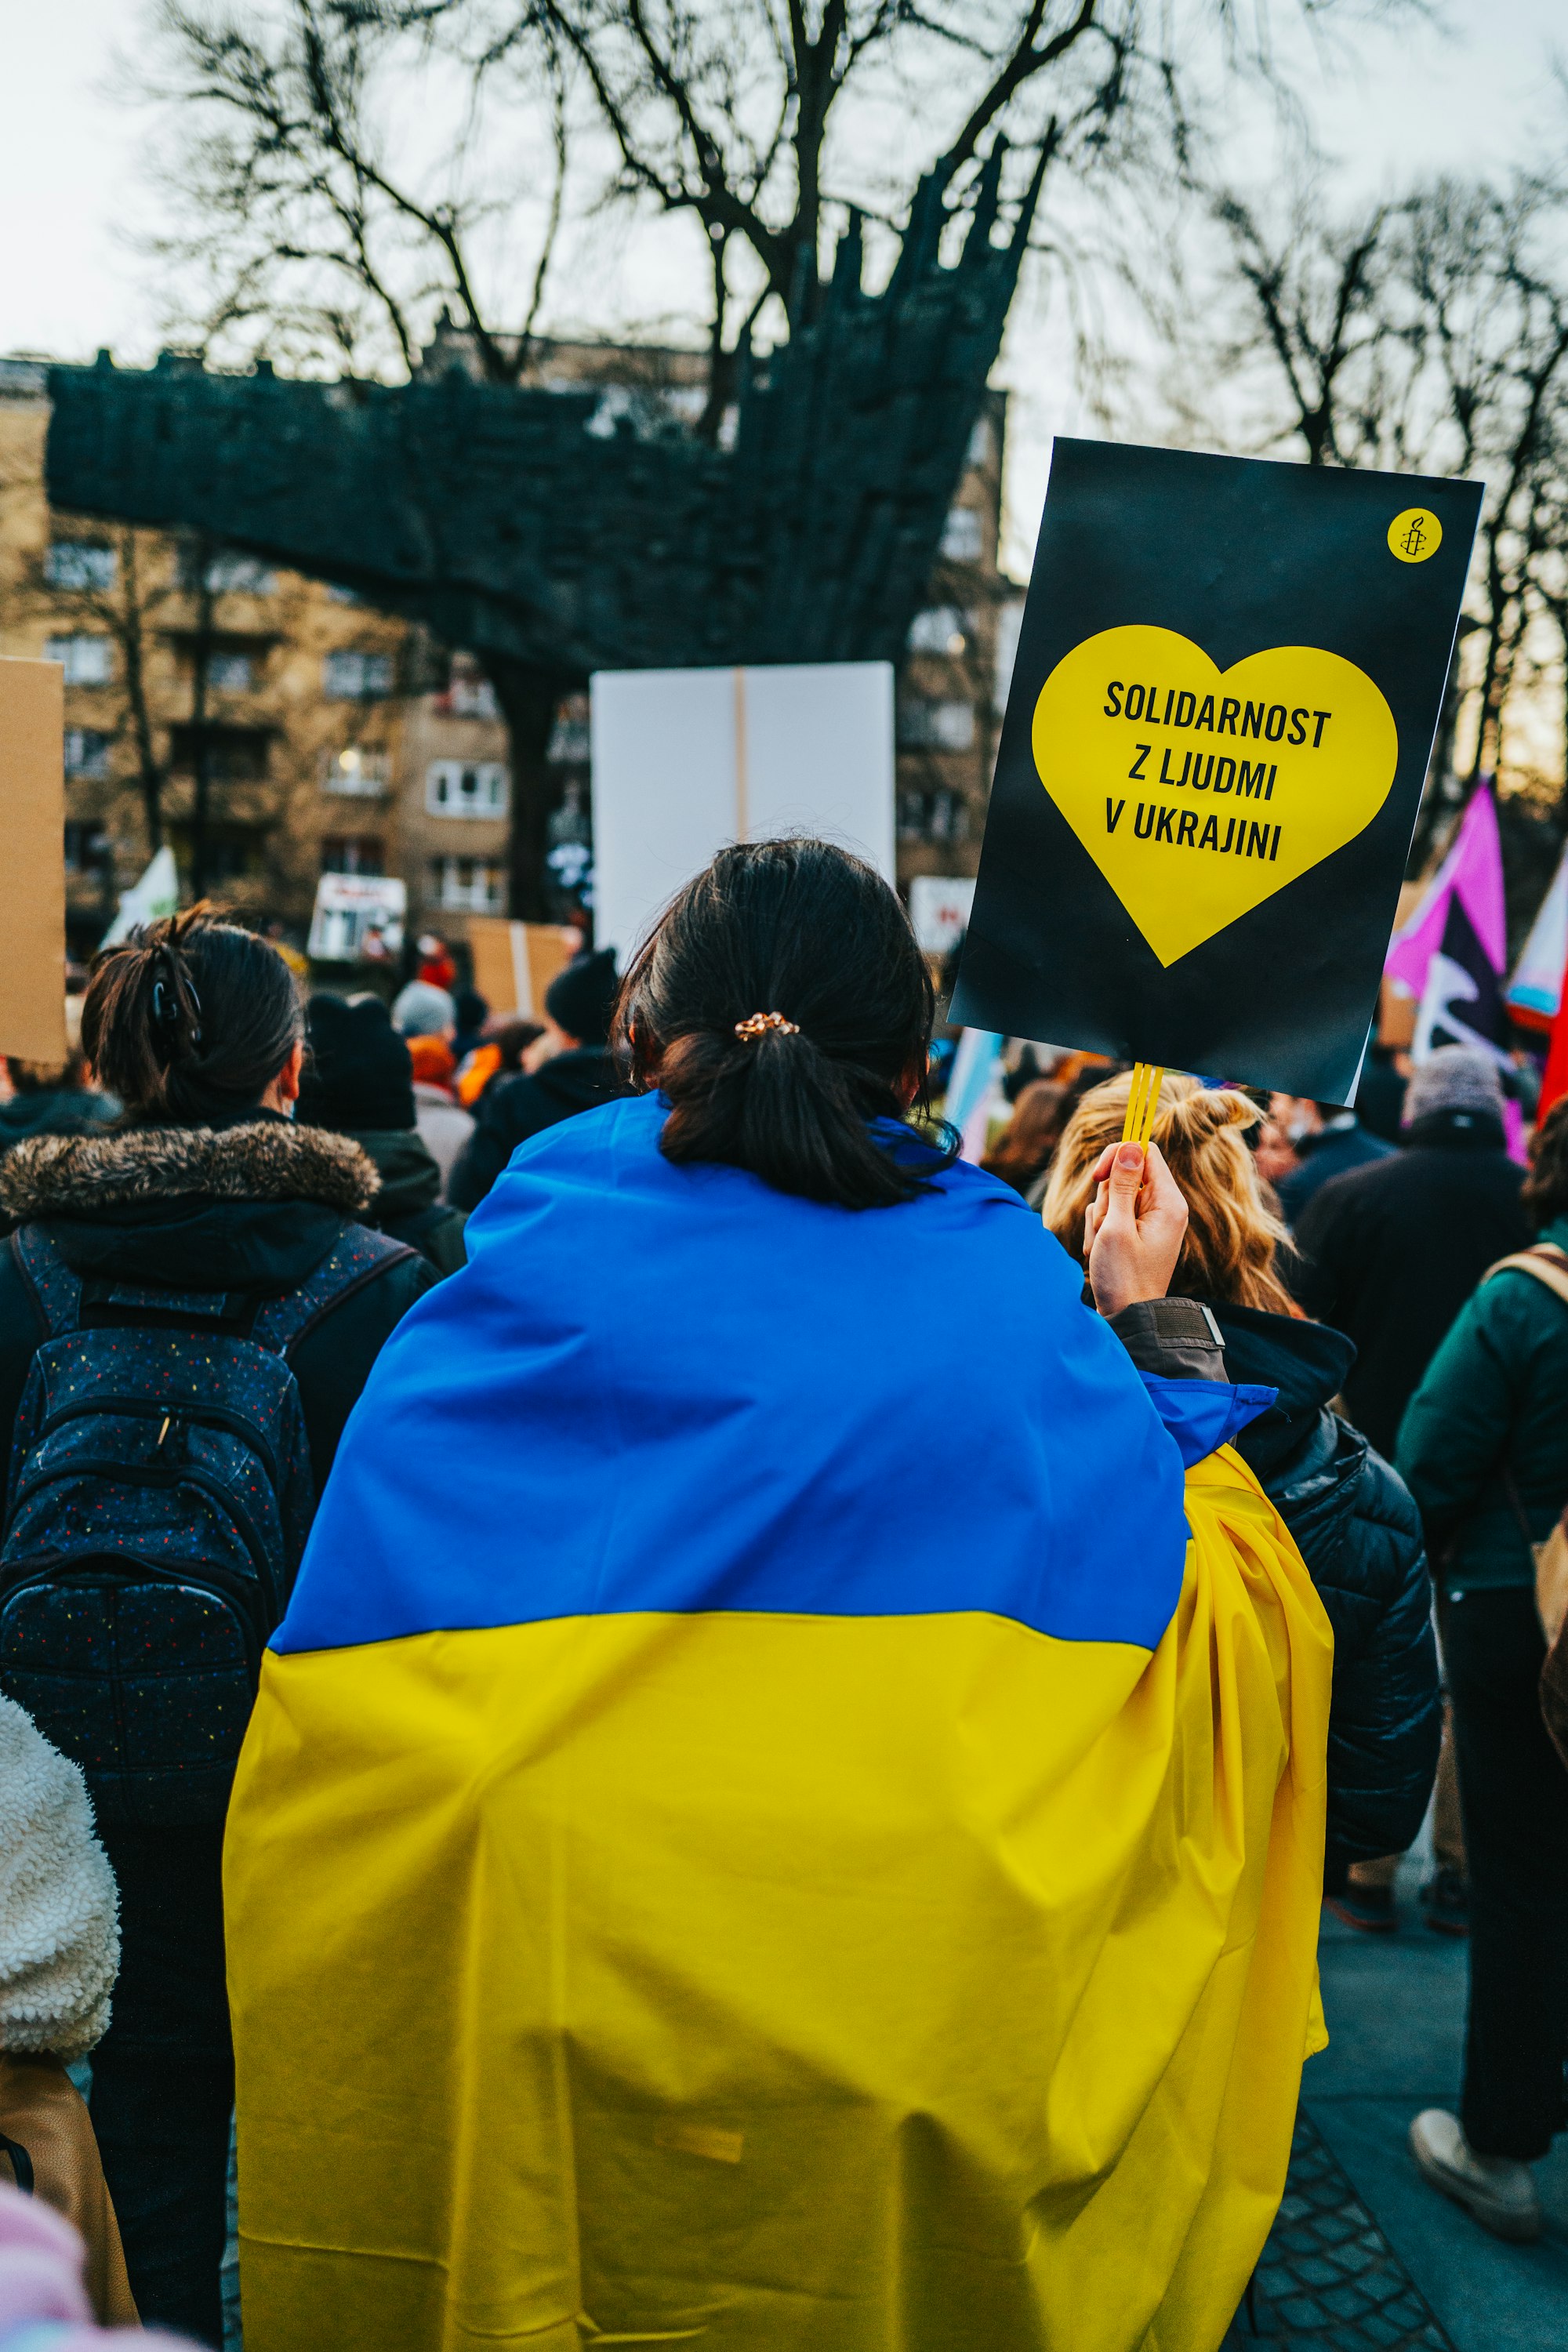 Solidarity with people in Ukraine